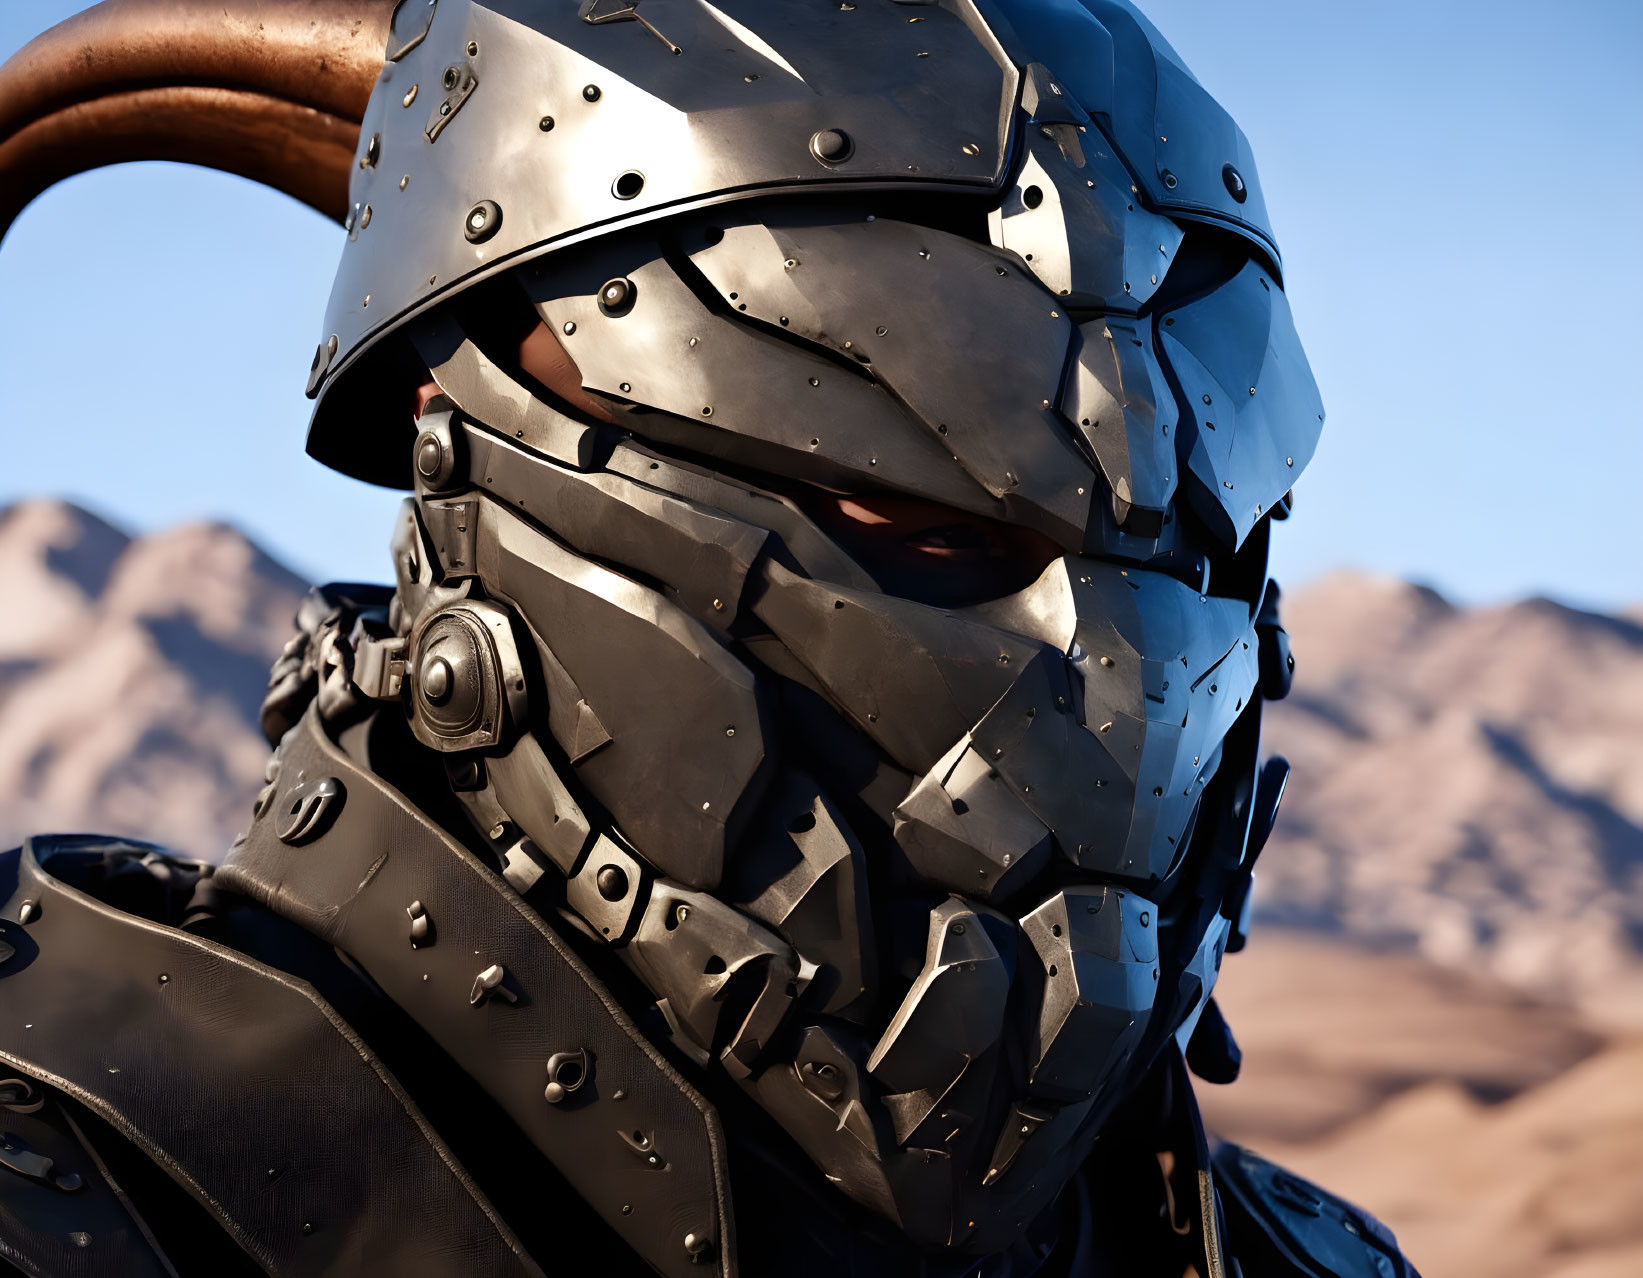 Futuristic armored suit person in desert backdrop